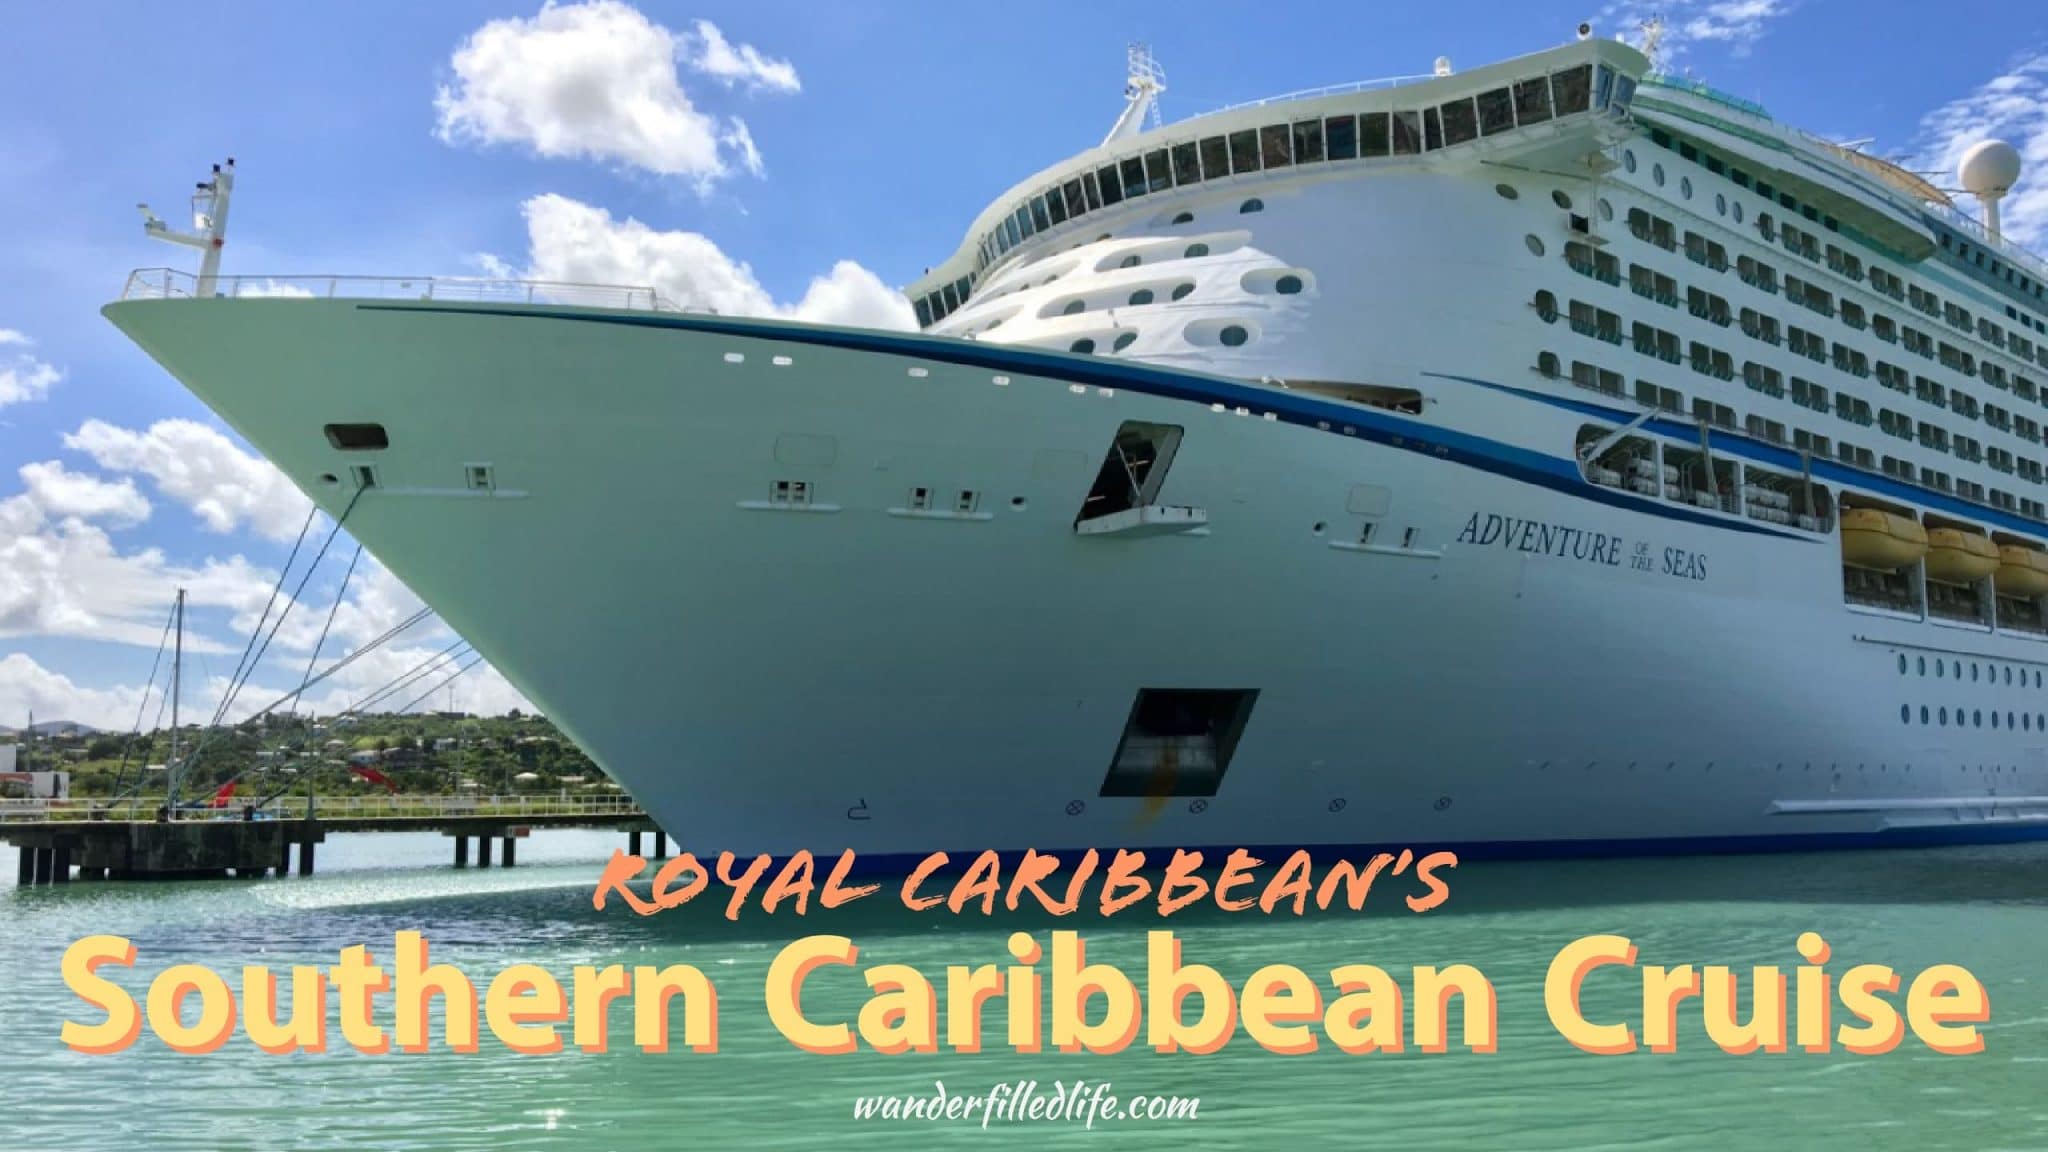 Royal Caribbean's Southern Caribbean Cruise